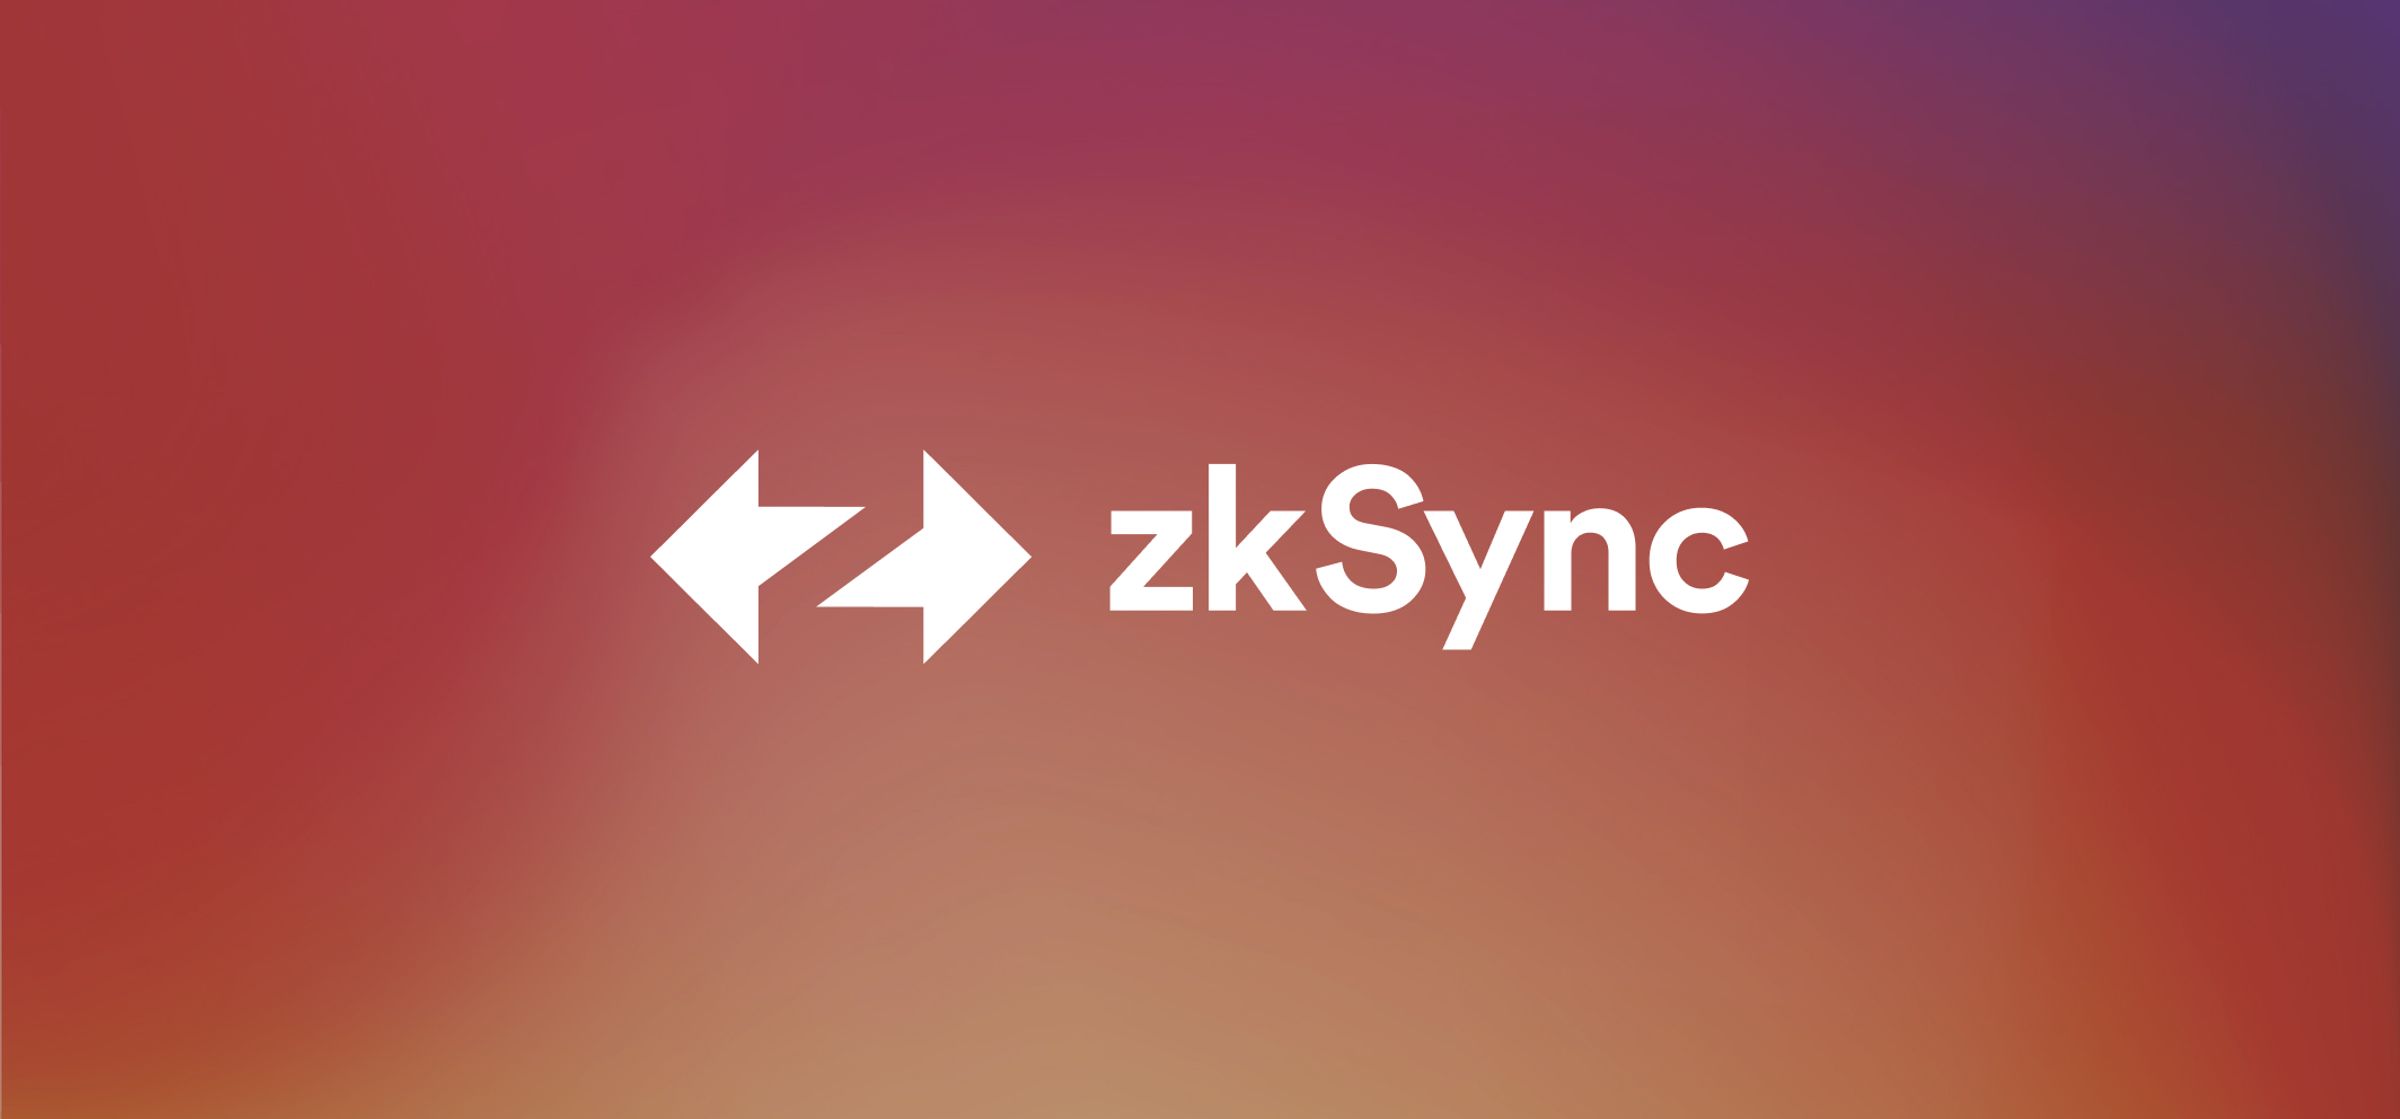 TiTi Protocol Has Announceed It Will Launch zkSync Era Mainnet on June 28th